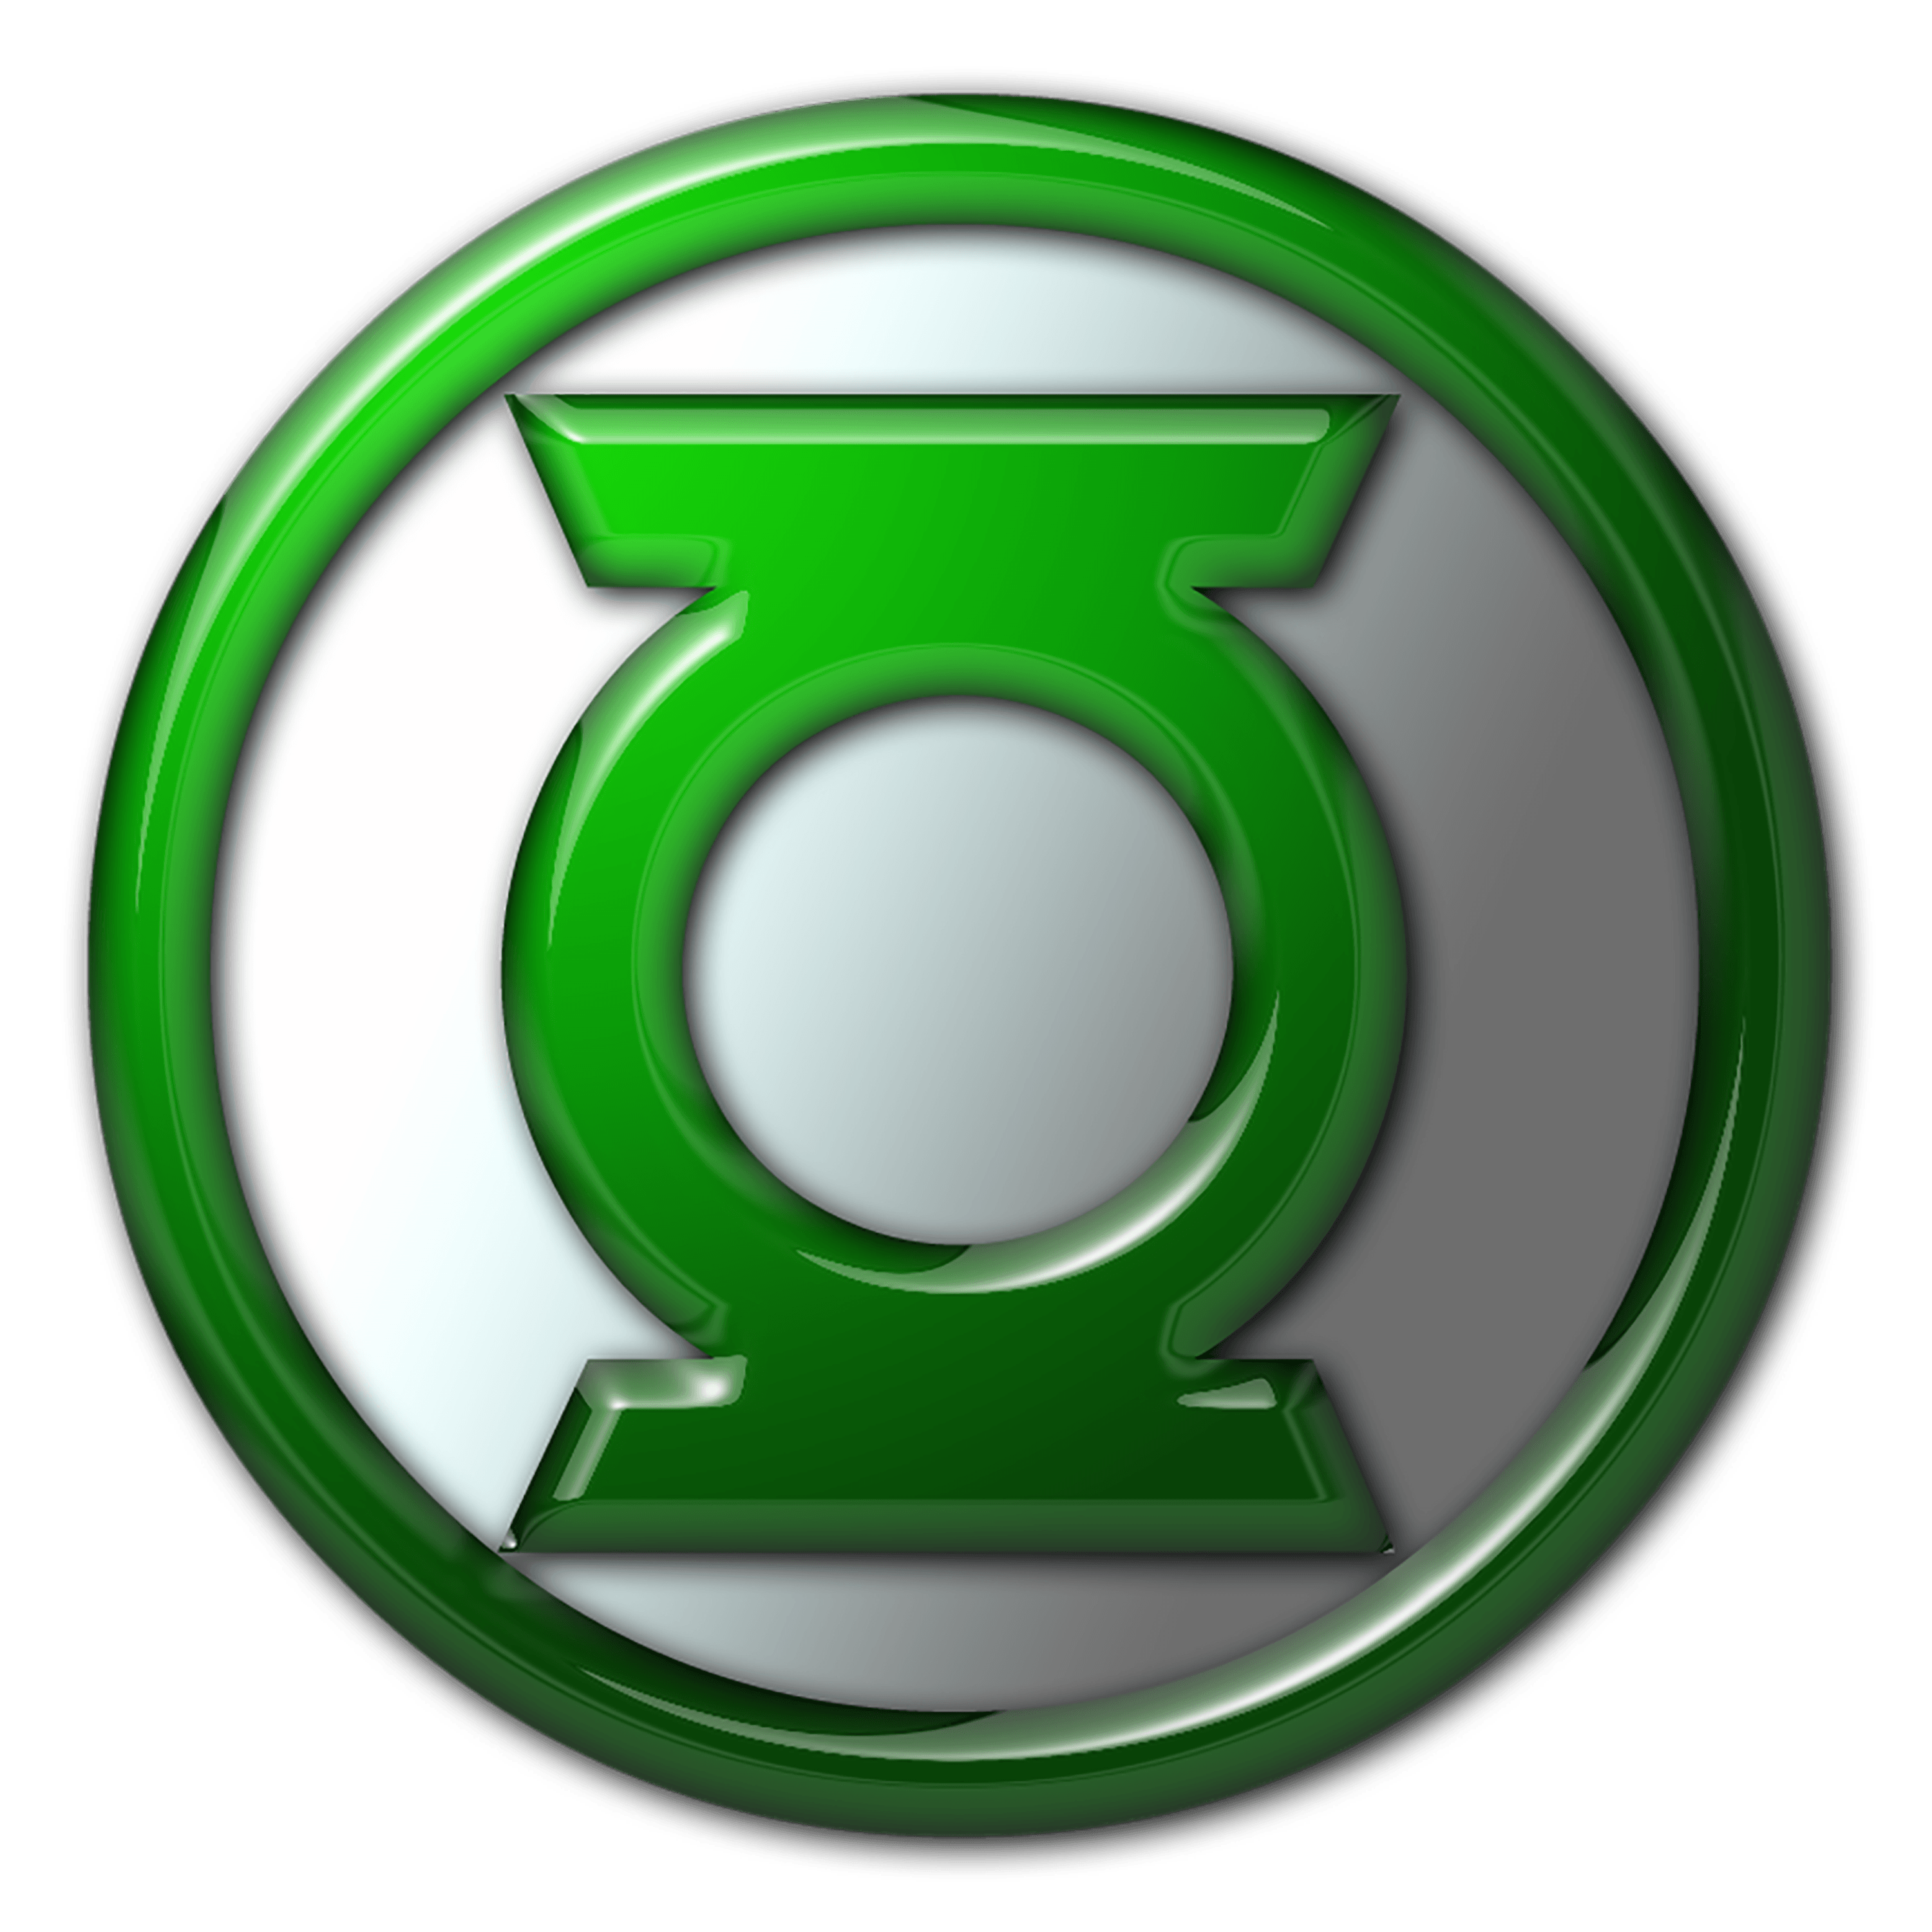 Green Lantern Symbol Logo - Green Lantern Logo created with PhotoShop. Green Lantern Related